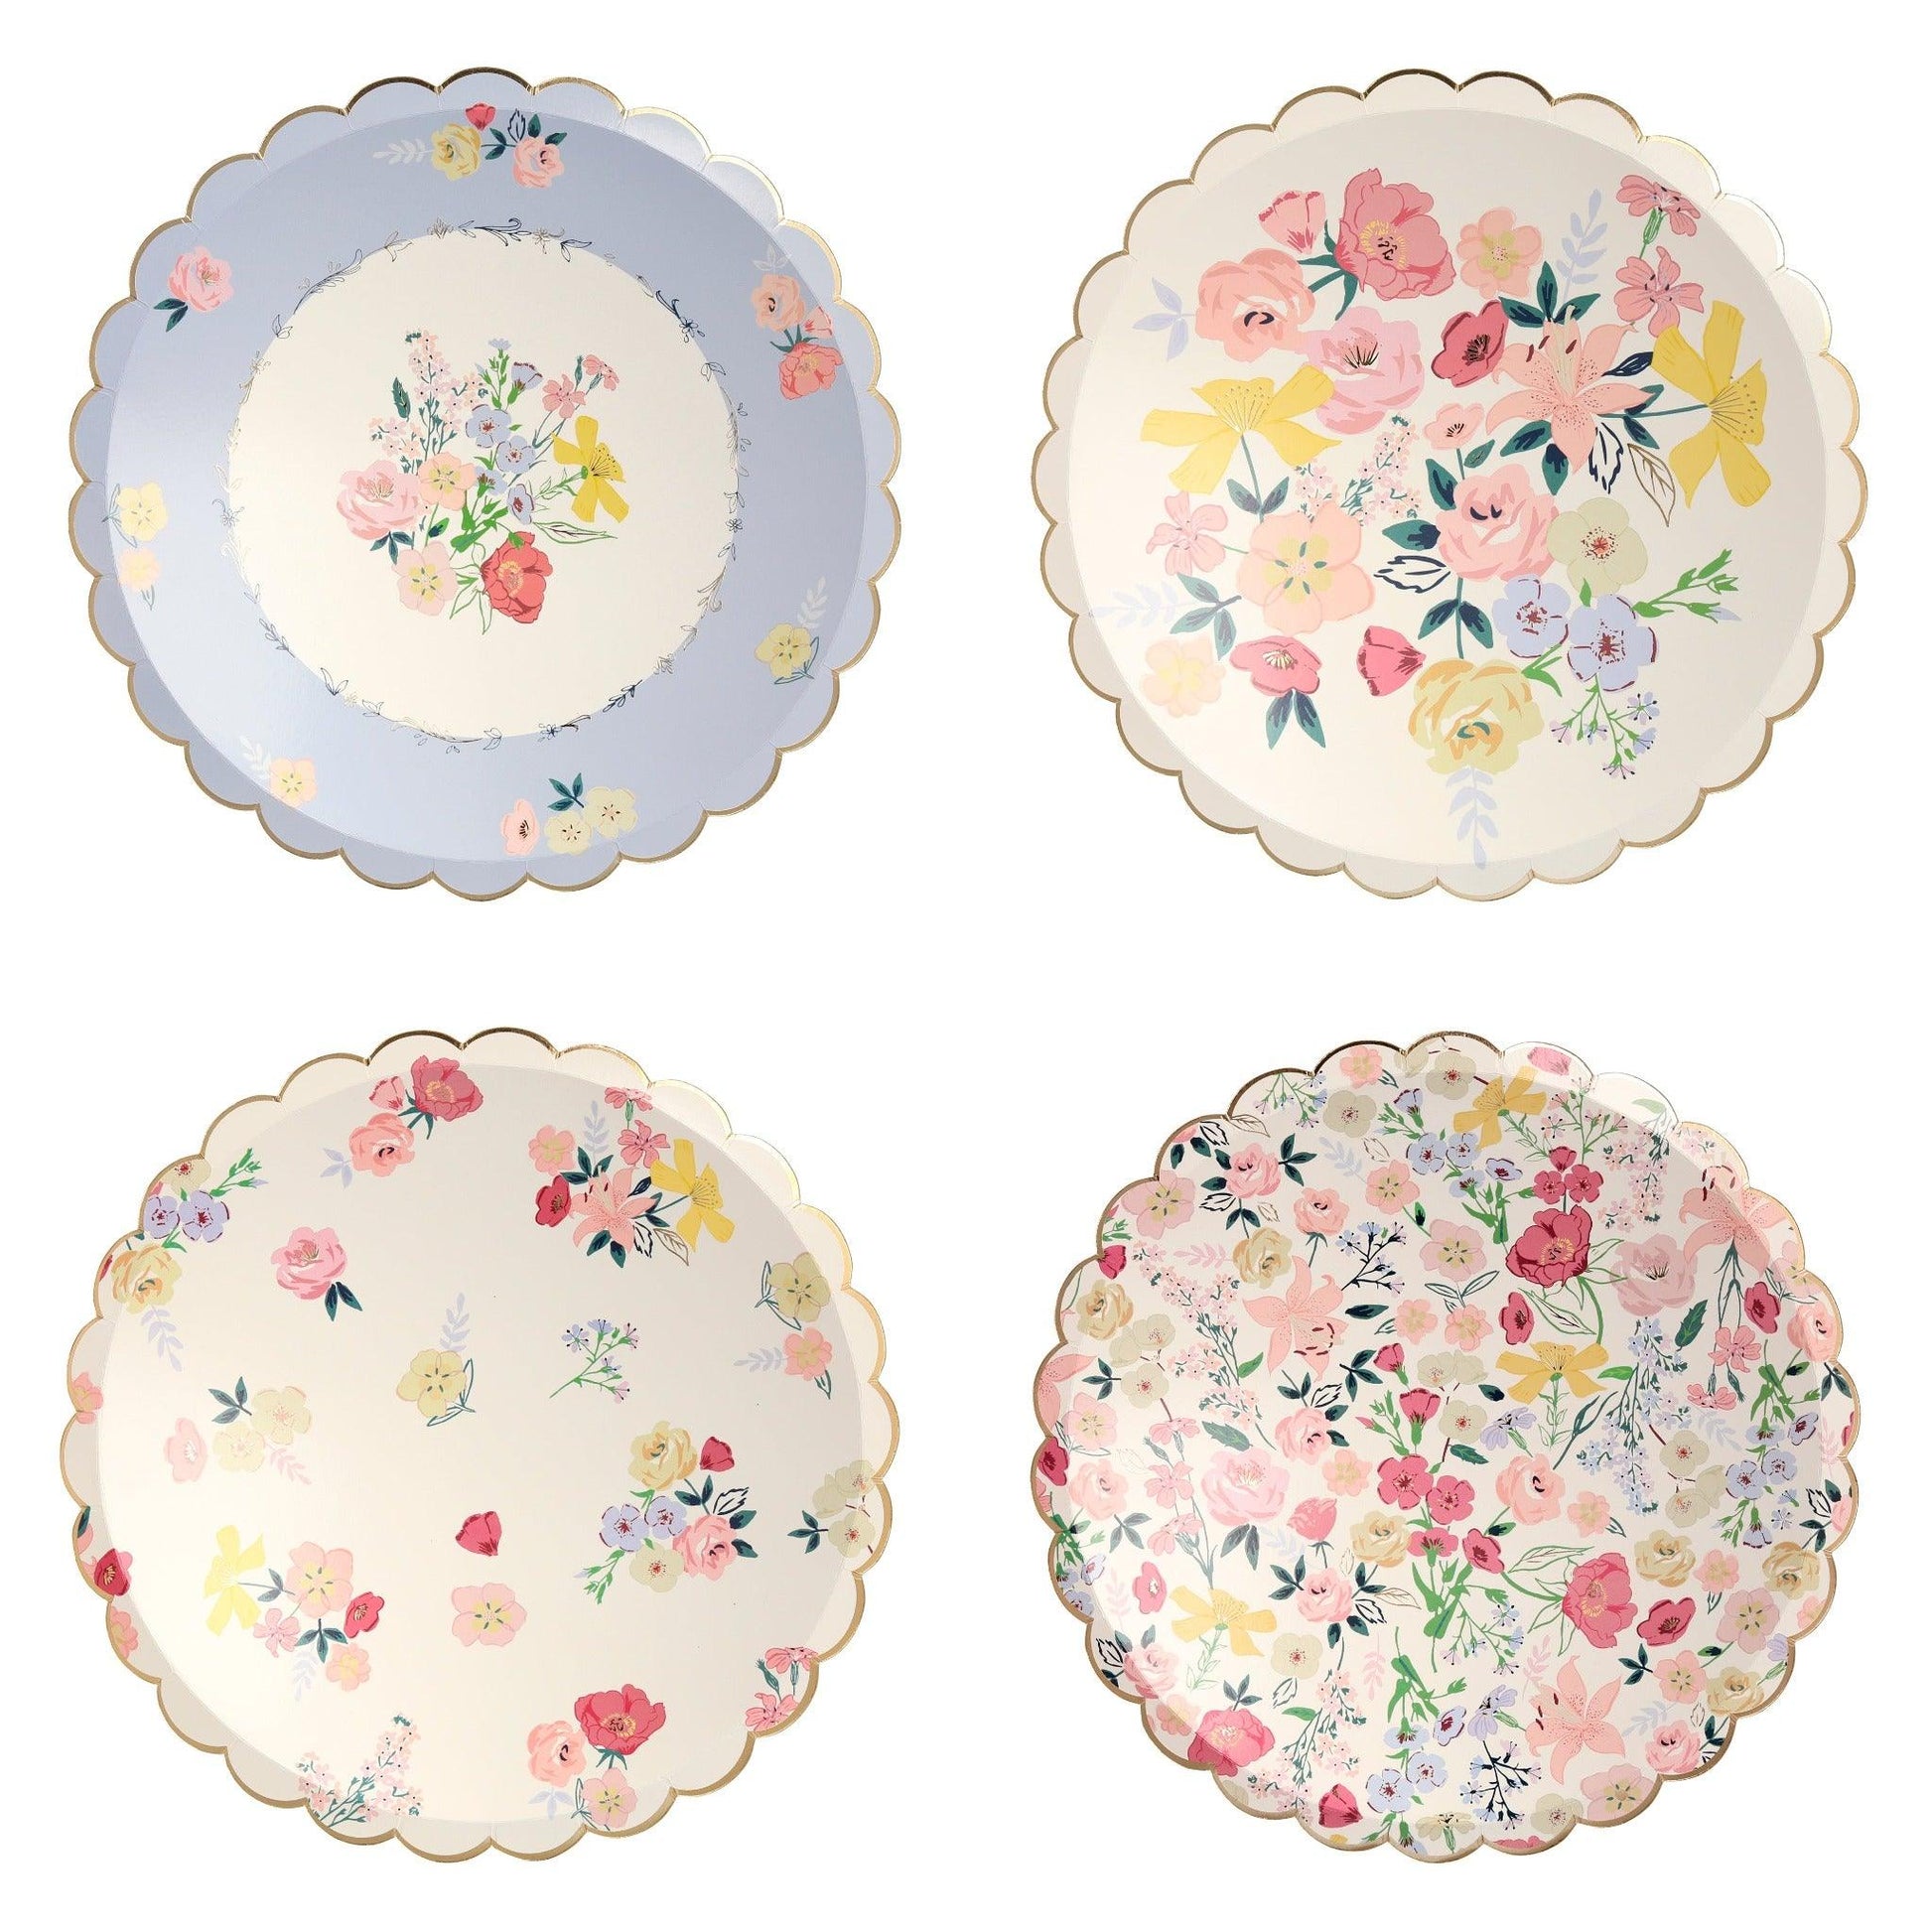 Meri Meri English garden dinner plates in soft lilac, pink, lemon and green floral patterns. 